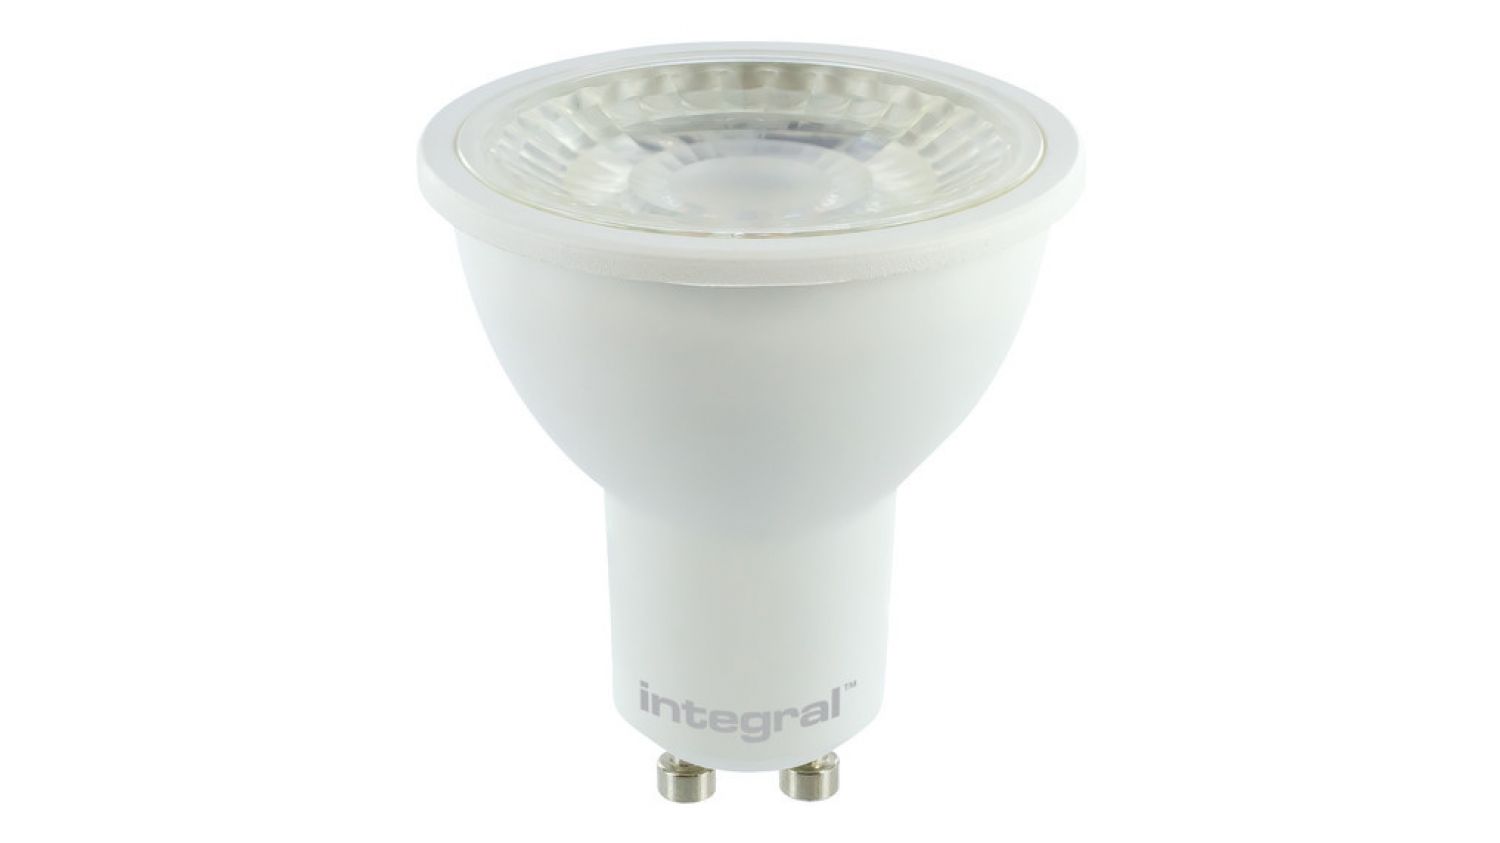 Integral ILGU10NC128: 2.5w GU10 LED spot bulb, non dimmable, 36° beam, 190lm =20w - from £1.33